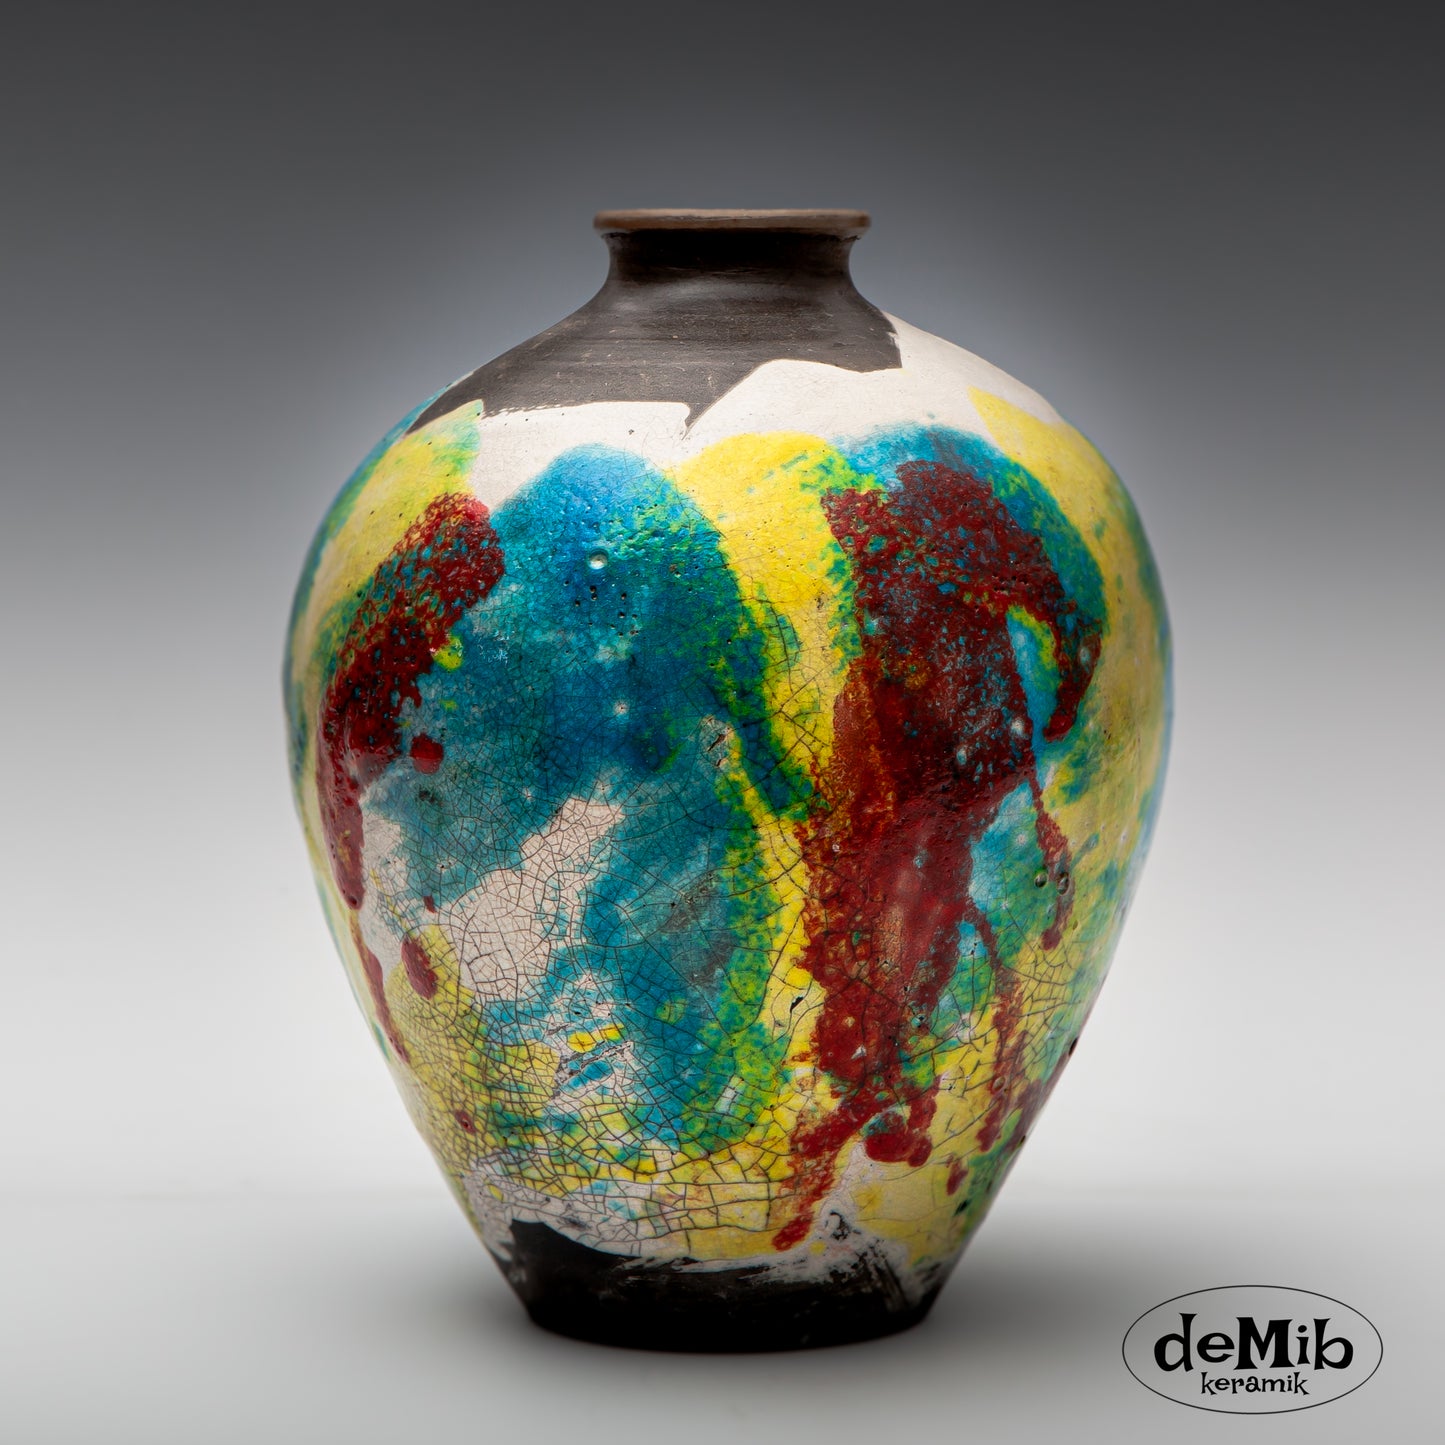 Round Raku Fired Vase with Vivid Colors (22 cm)